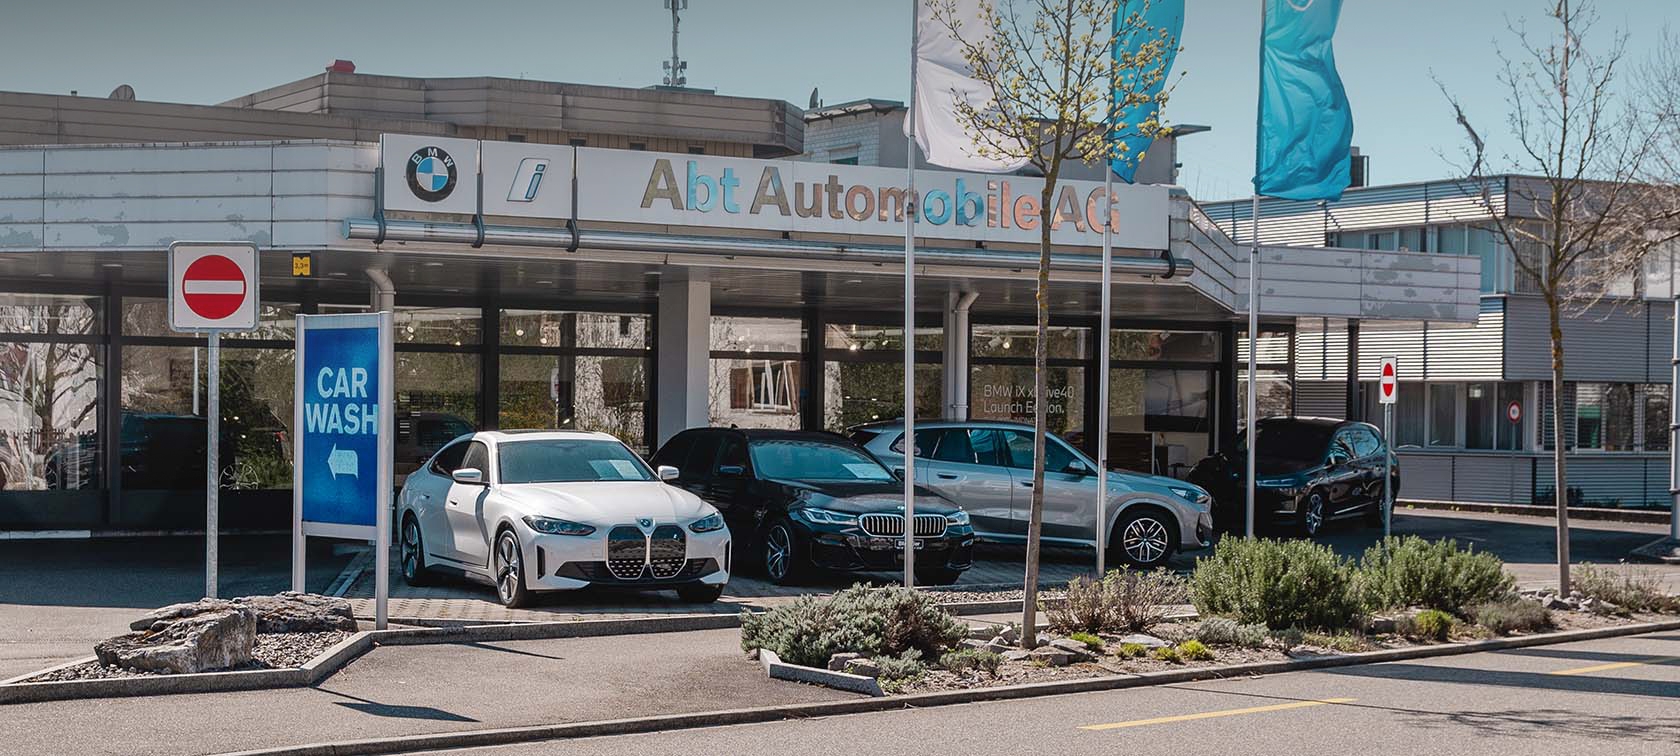 Abt Automobile BMW Service Partner in Liestal